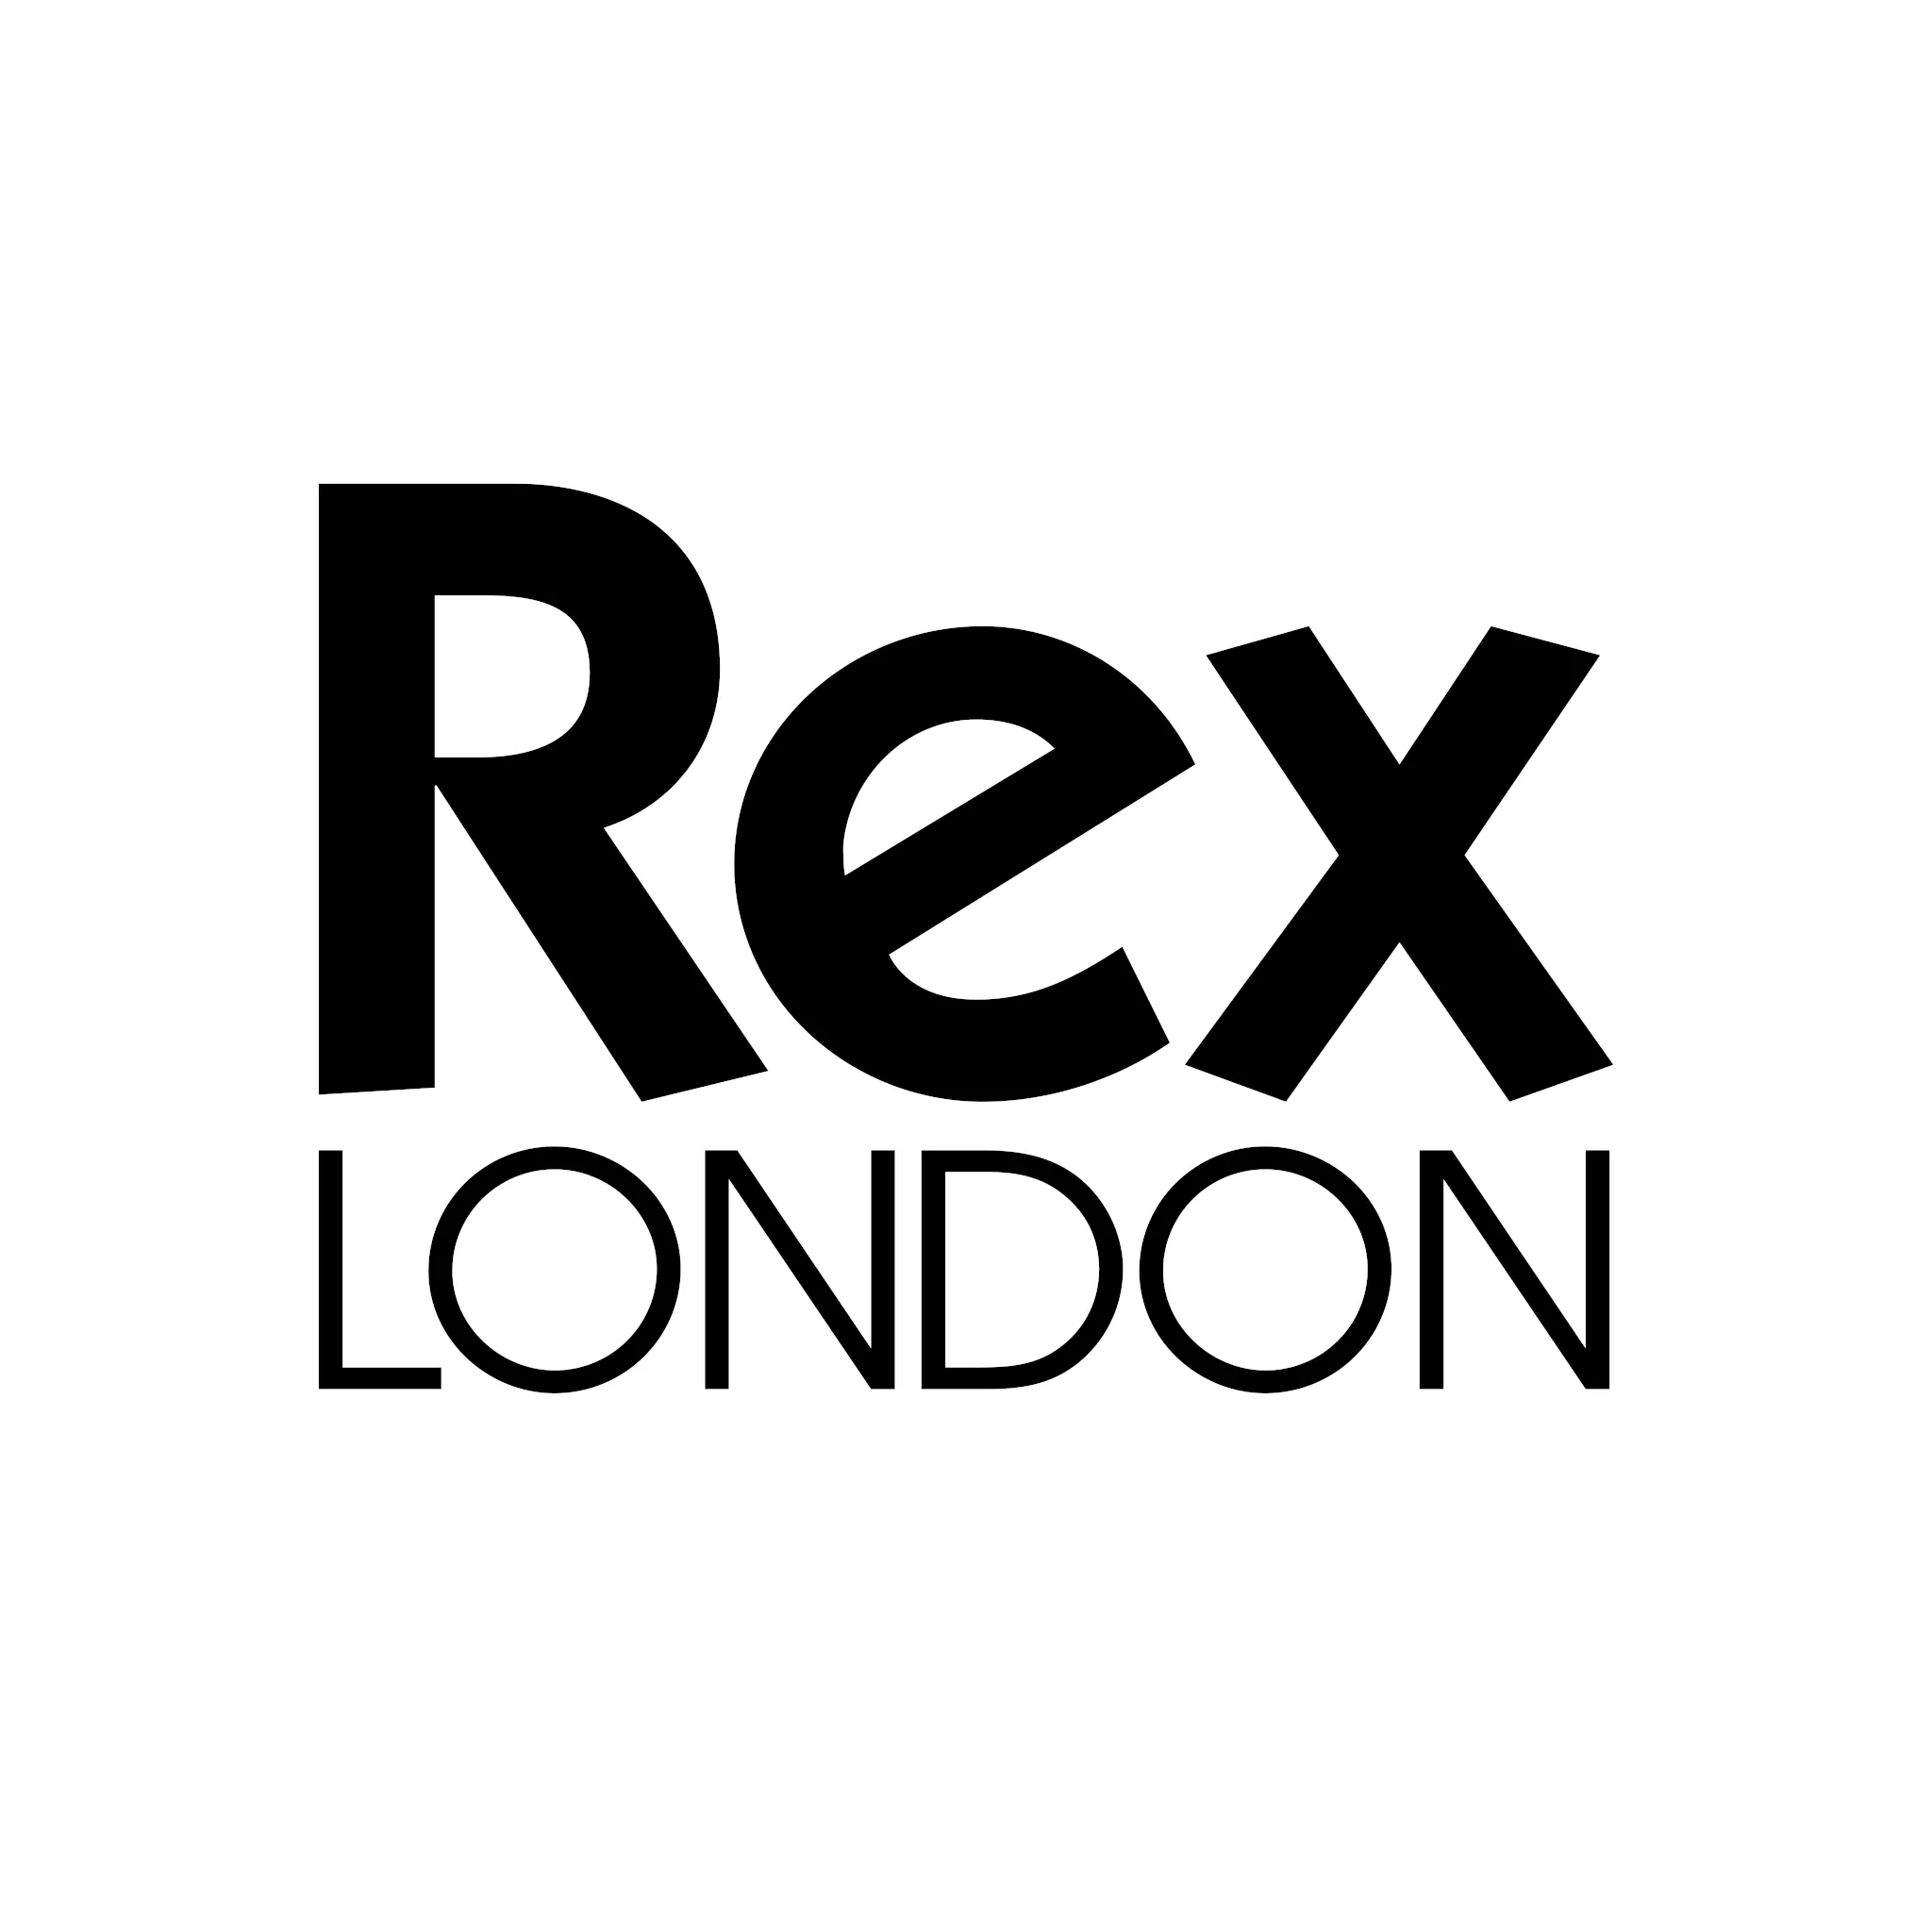 Rex London Promo Code 